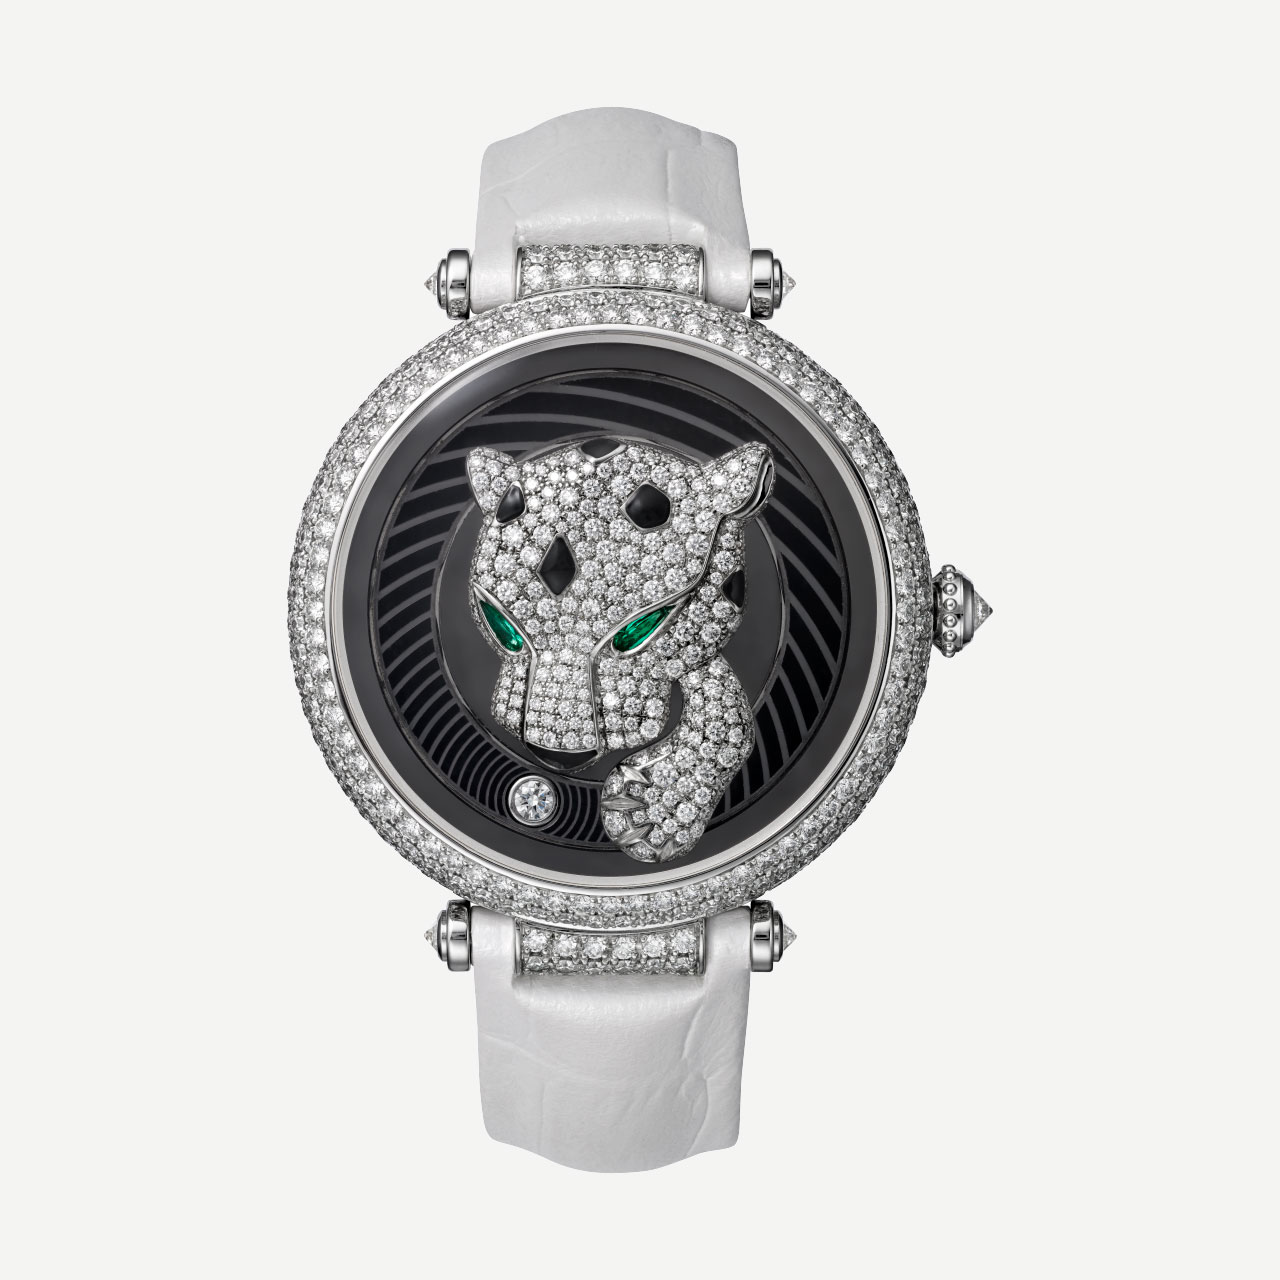 Cartier Panthère Joueuse watch